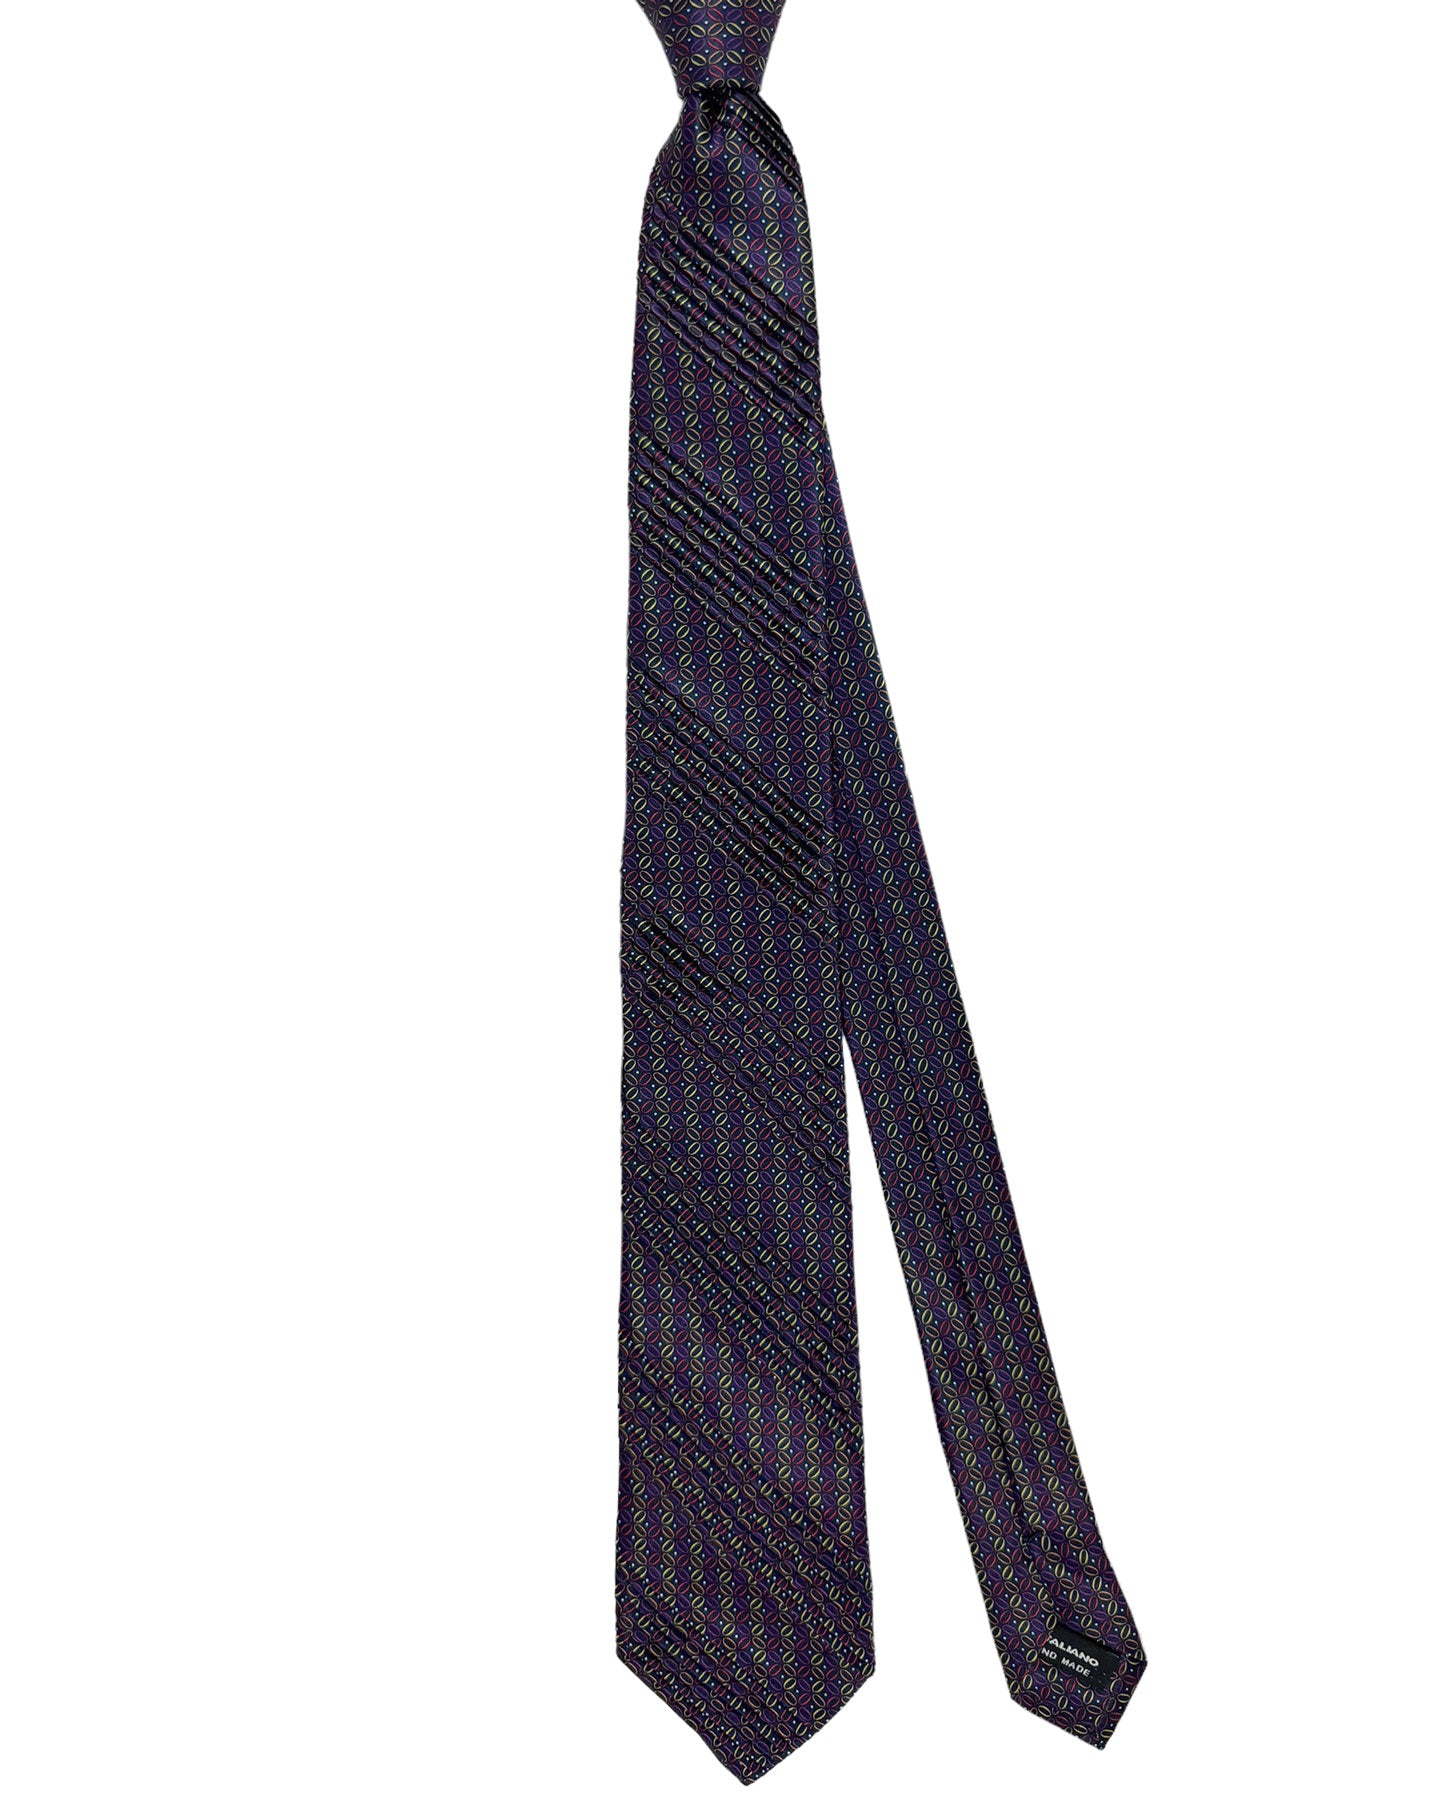 Vitaliano Pancaldi PLEATED SILK Tie Black Purple Lime Red Micro Pattern Design